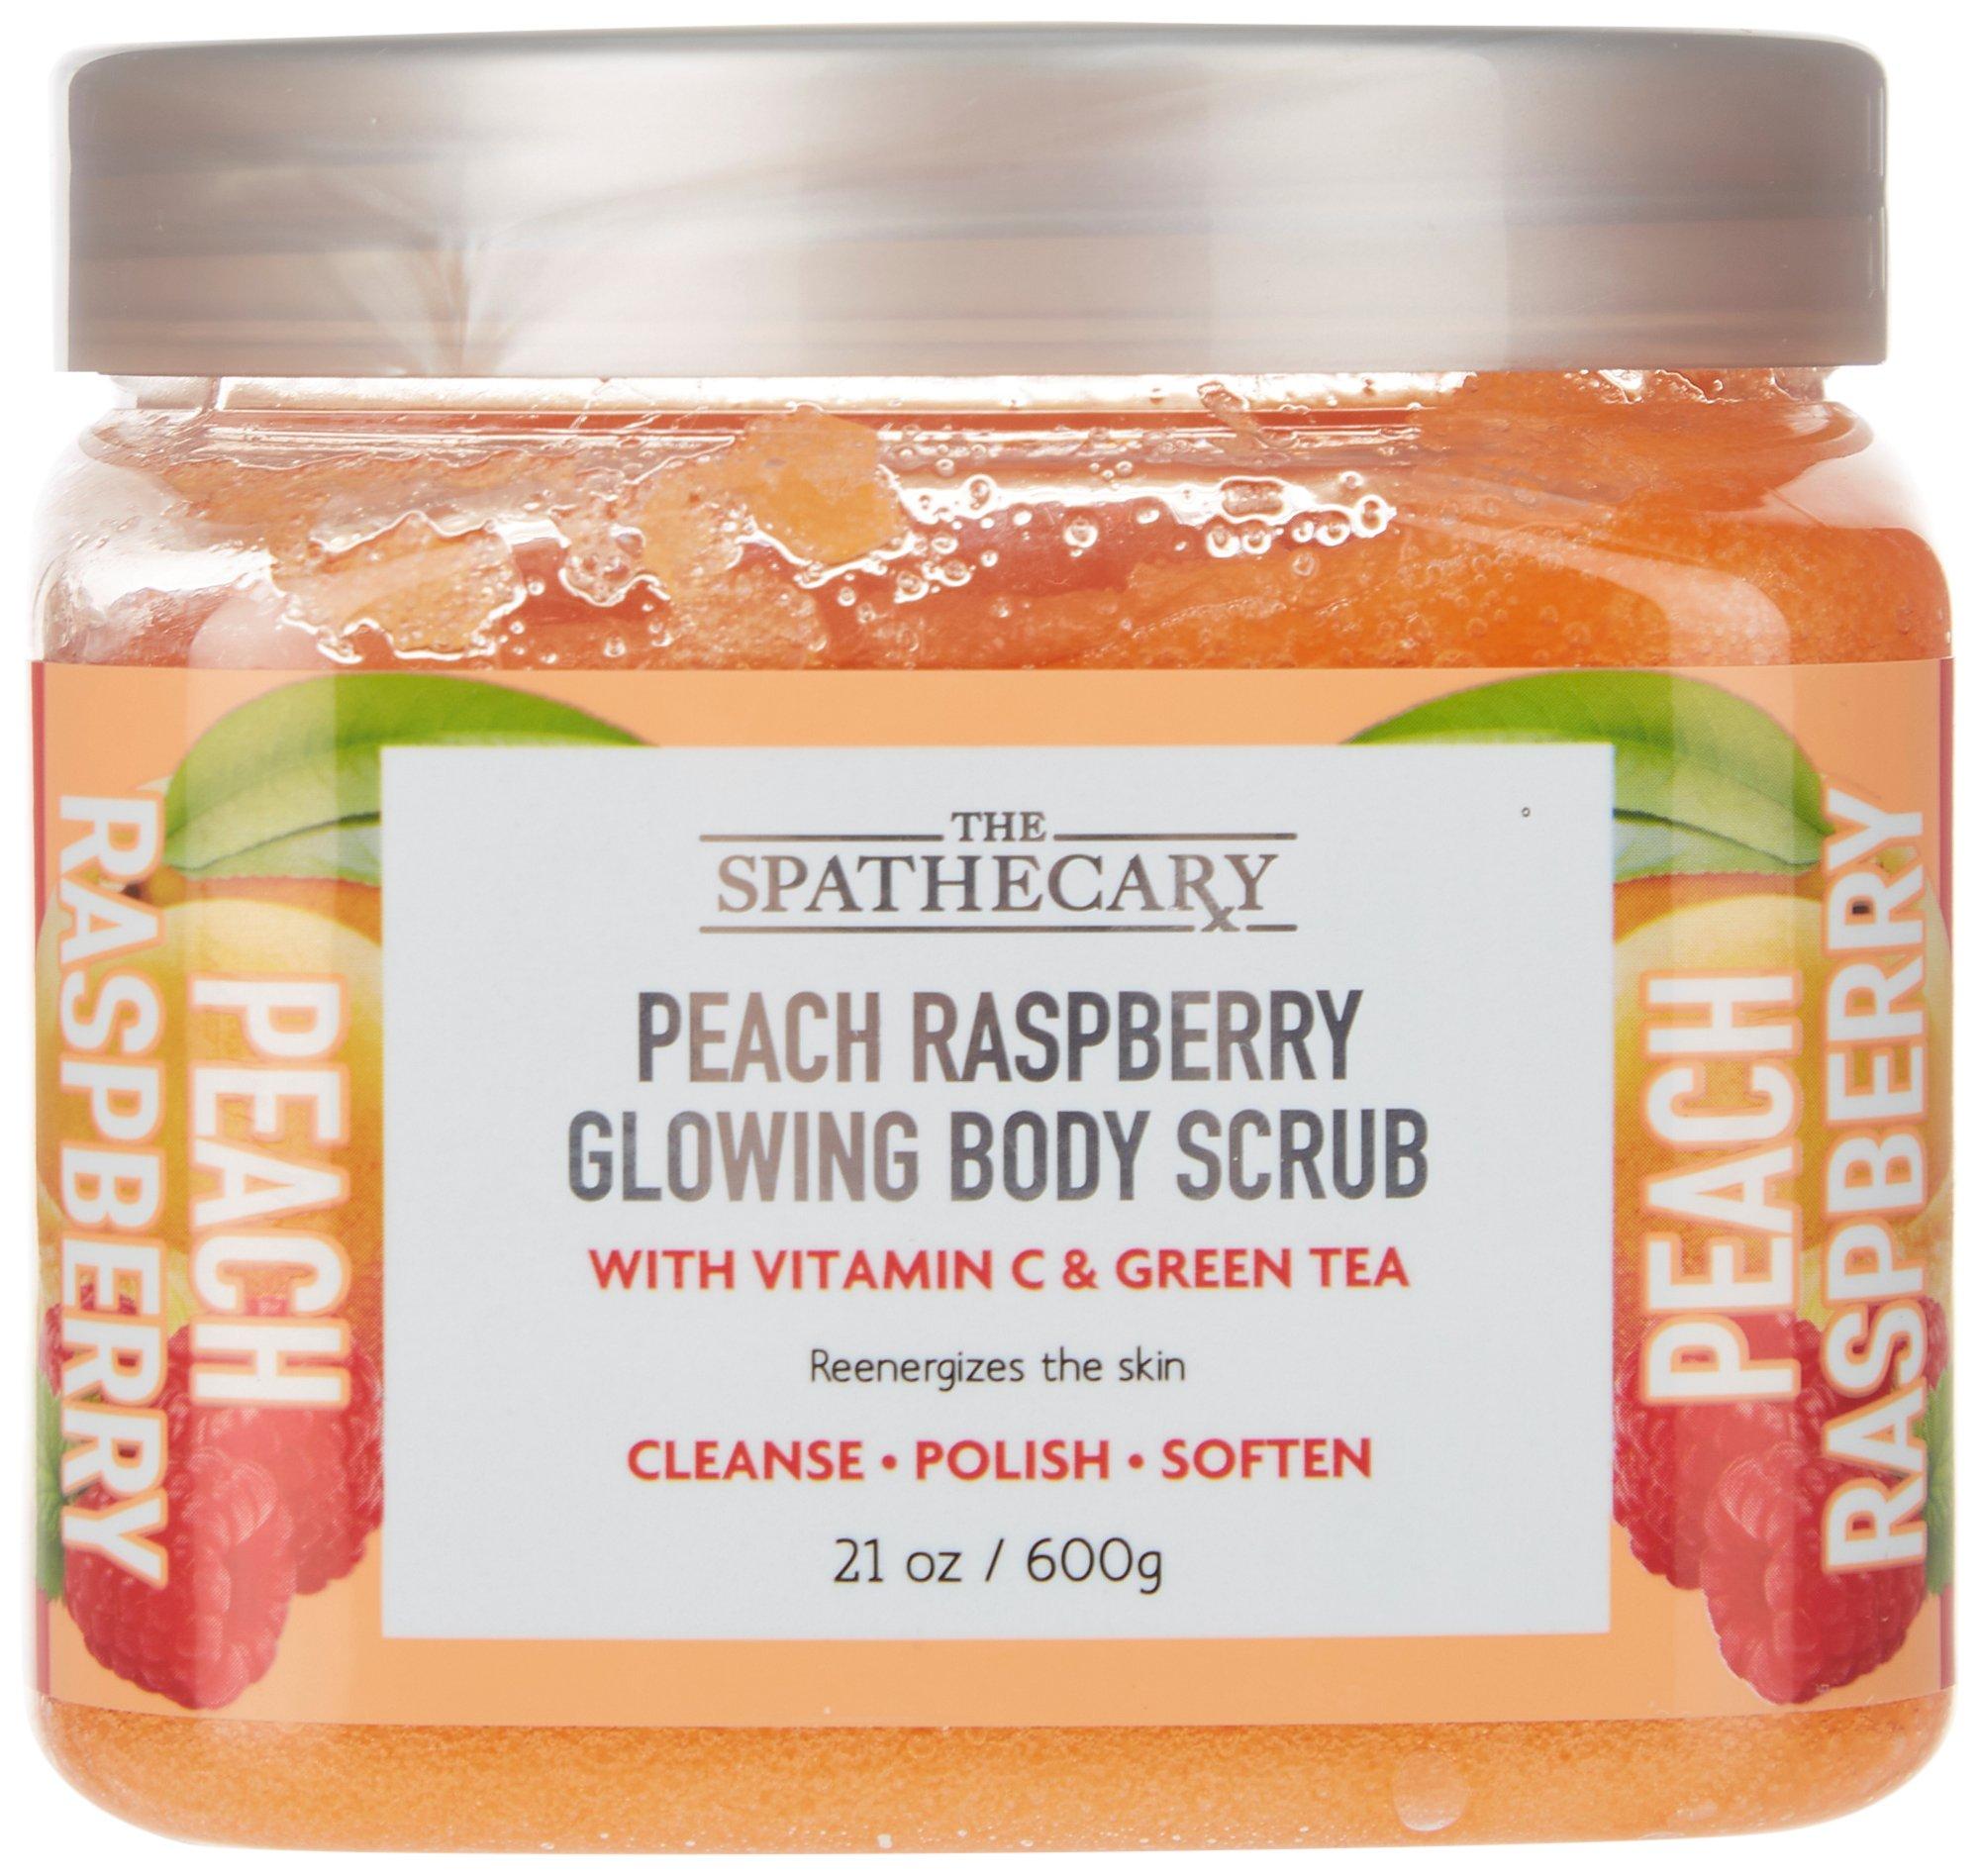 The Spathecary Vit C Green Tea Peach Glowing Body Scrub